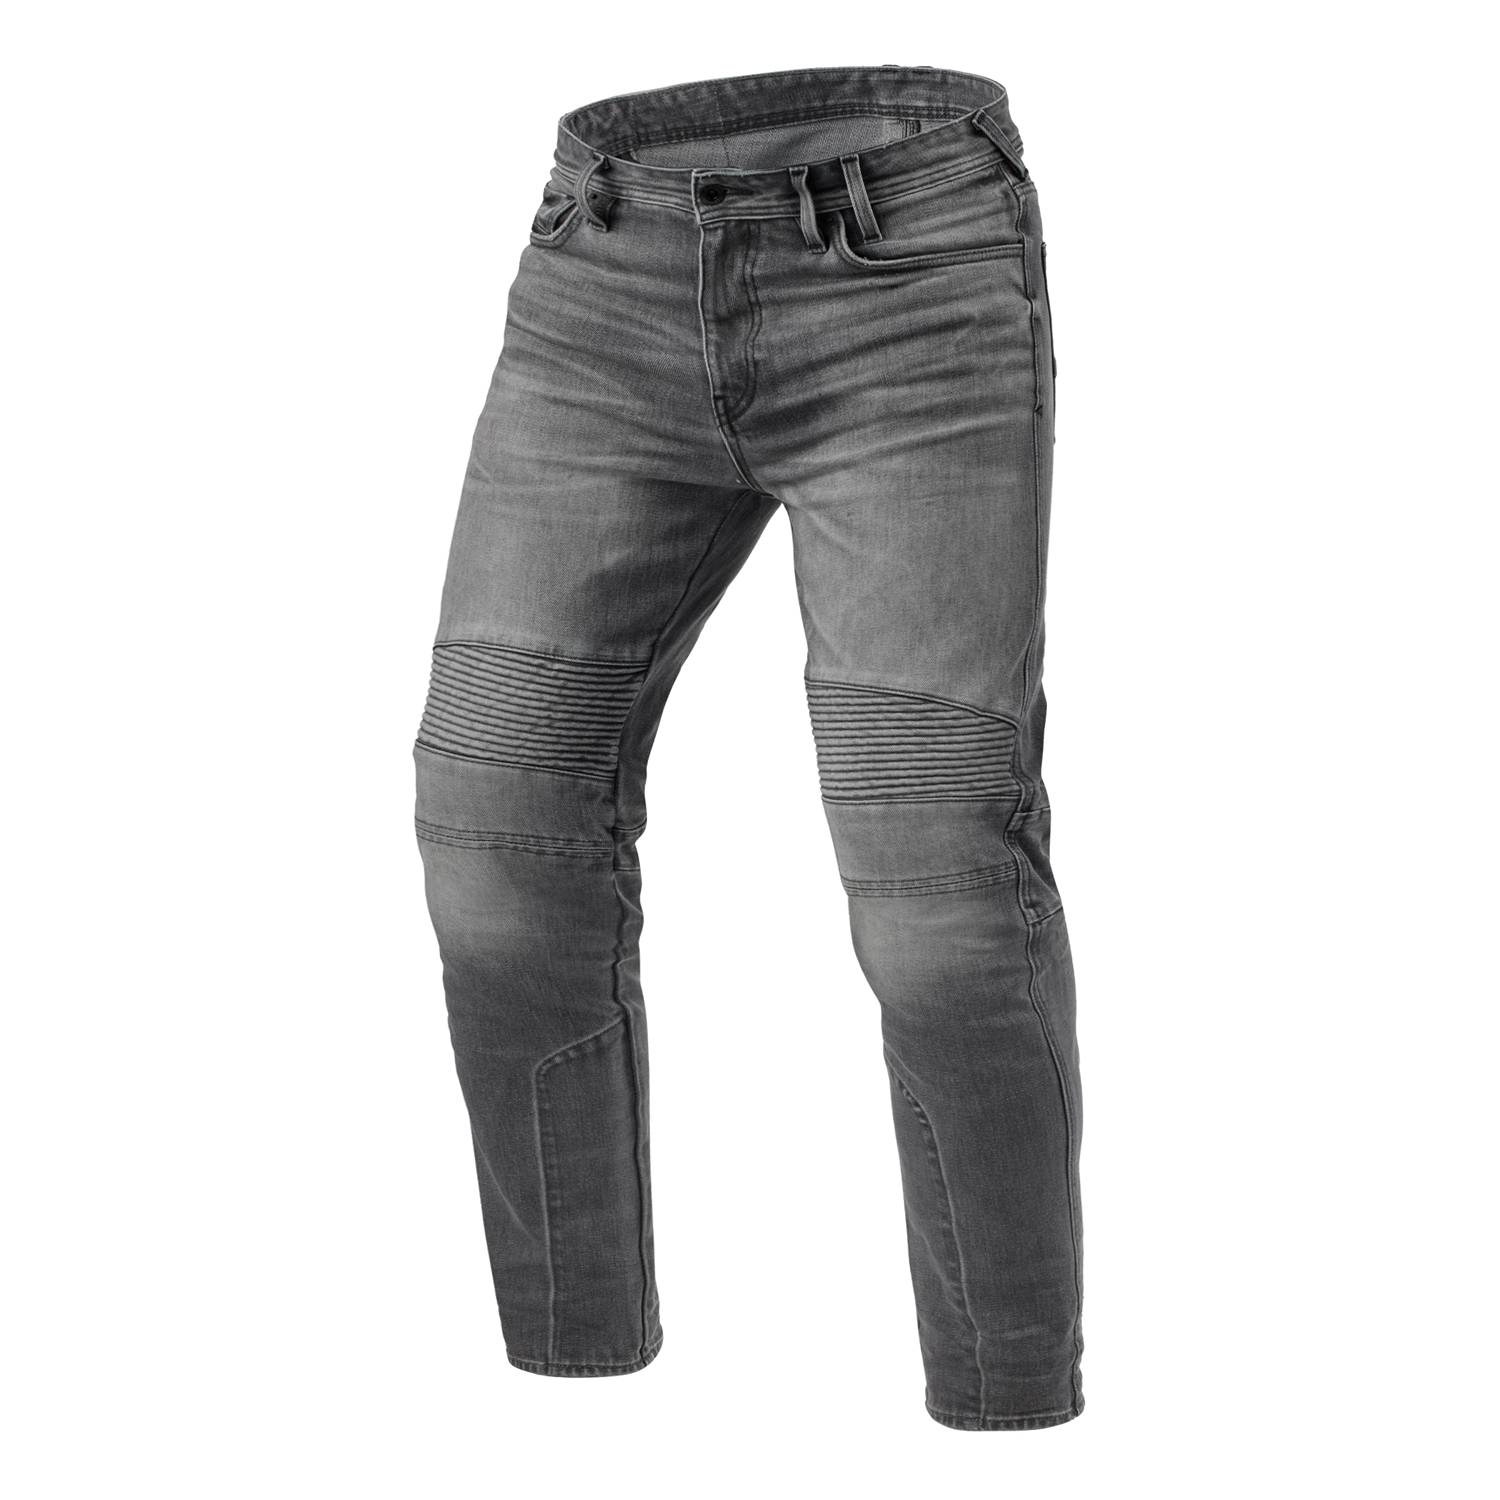 Image of REV'IT! Jeans Moto 2 TF Medium Grey Used L34 Motorcycle Jeans Größe L34/W28